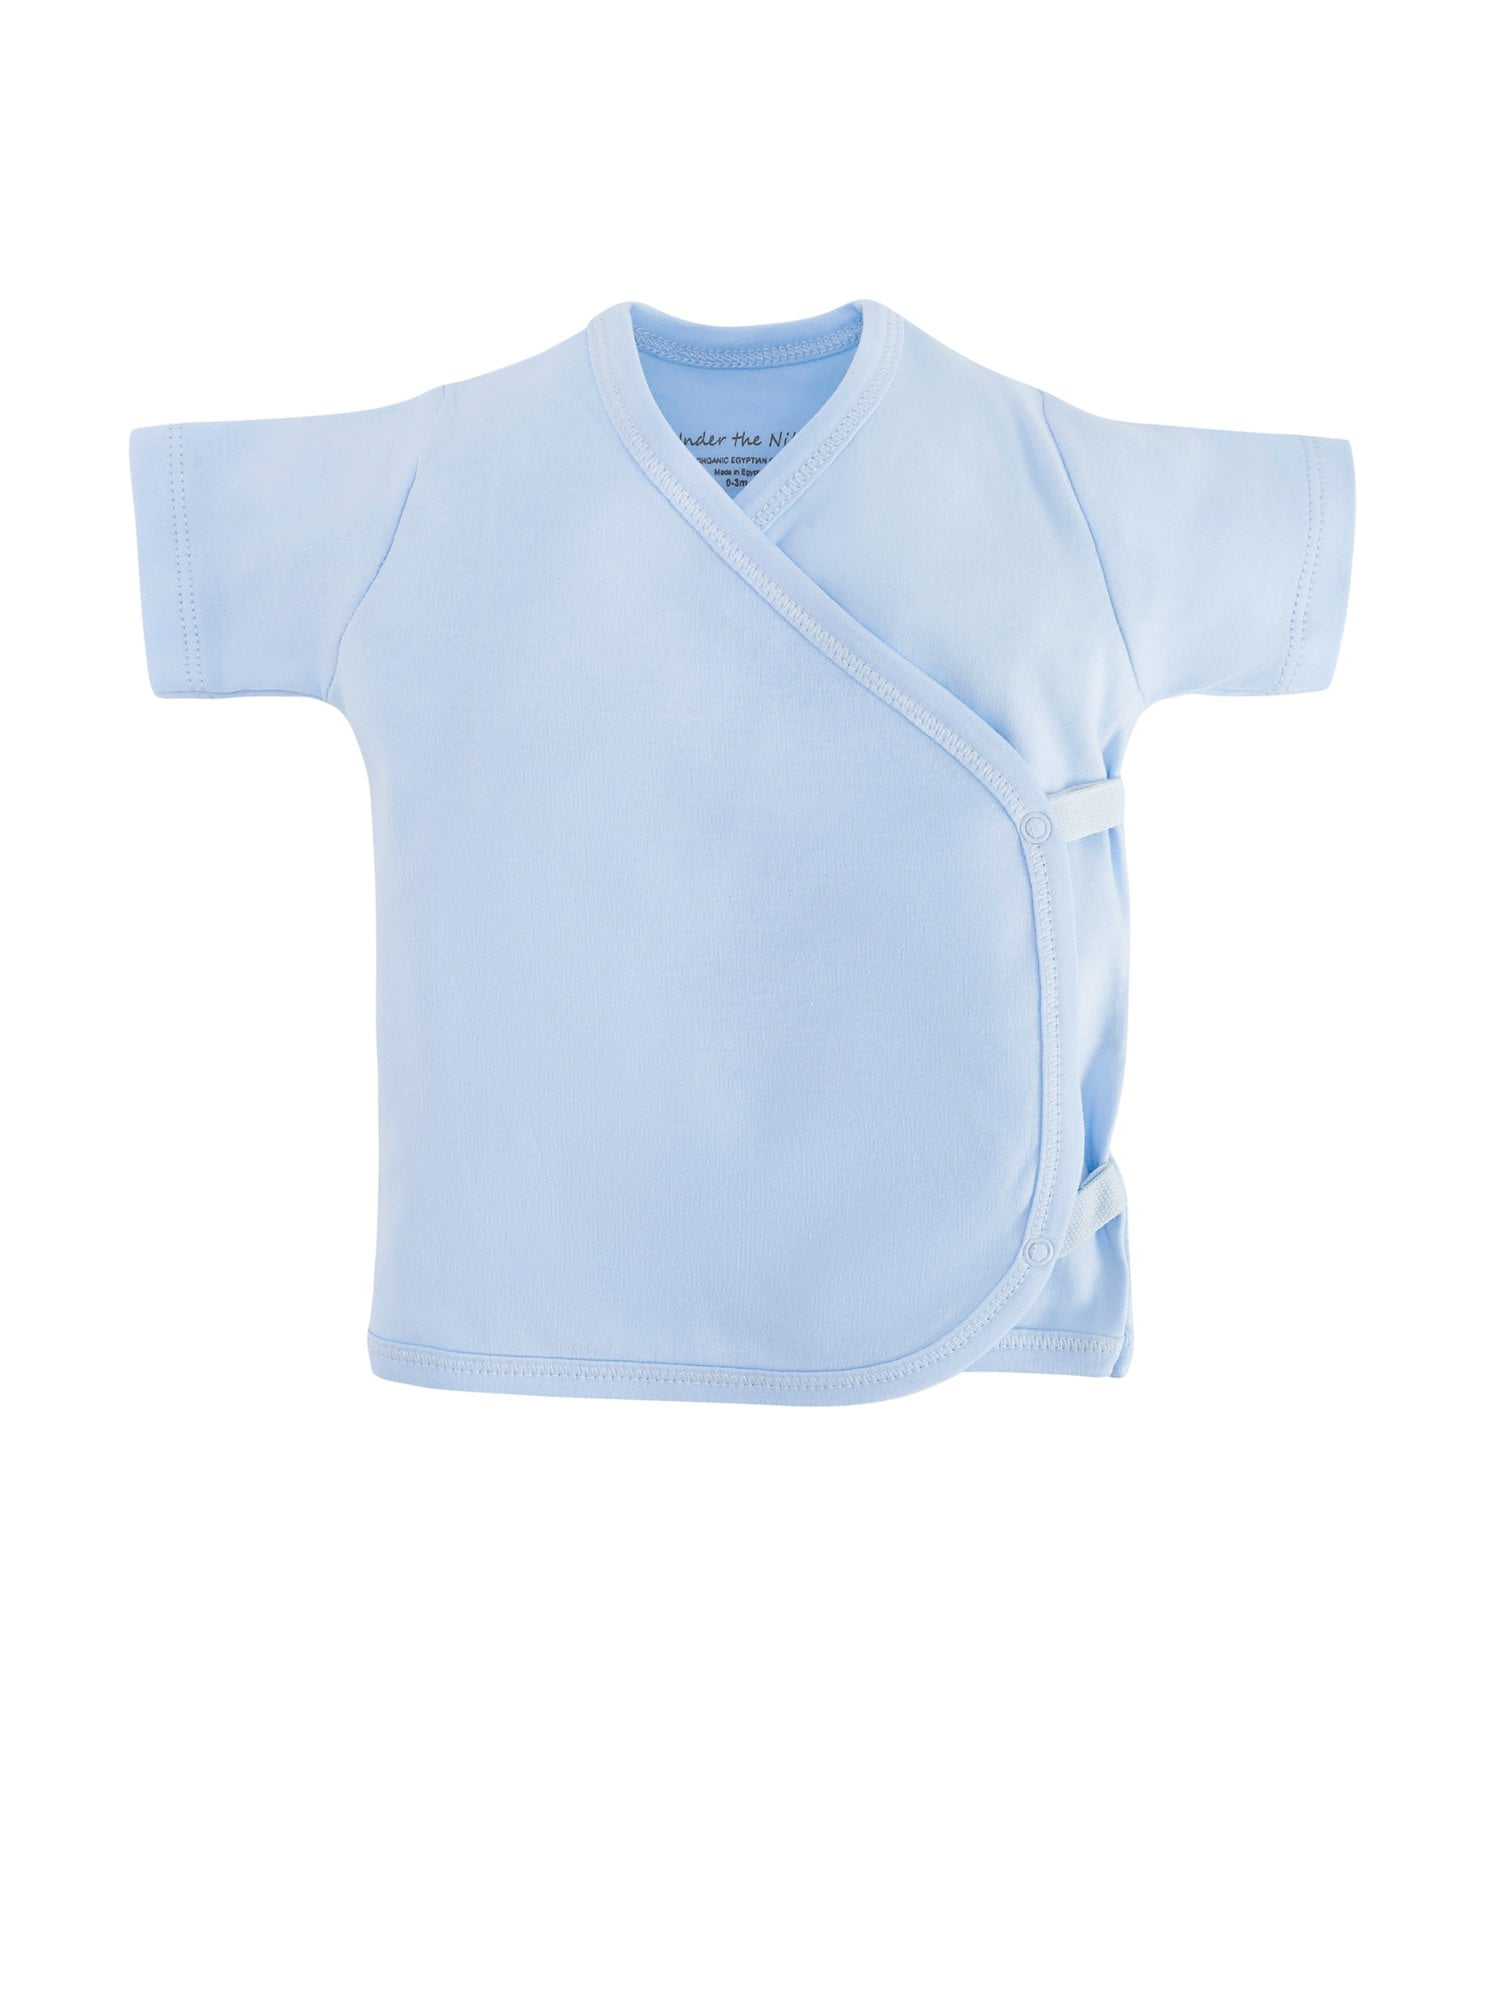 Essentials Unisex-Baby 6-Pack Lap-Shoulder Tee T-Shirt Set